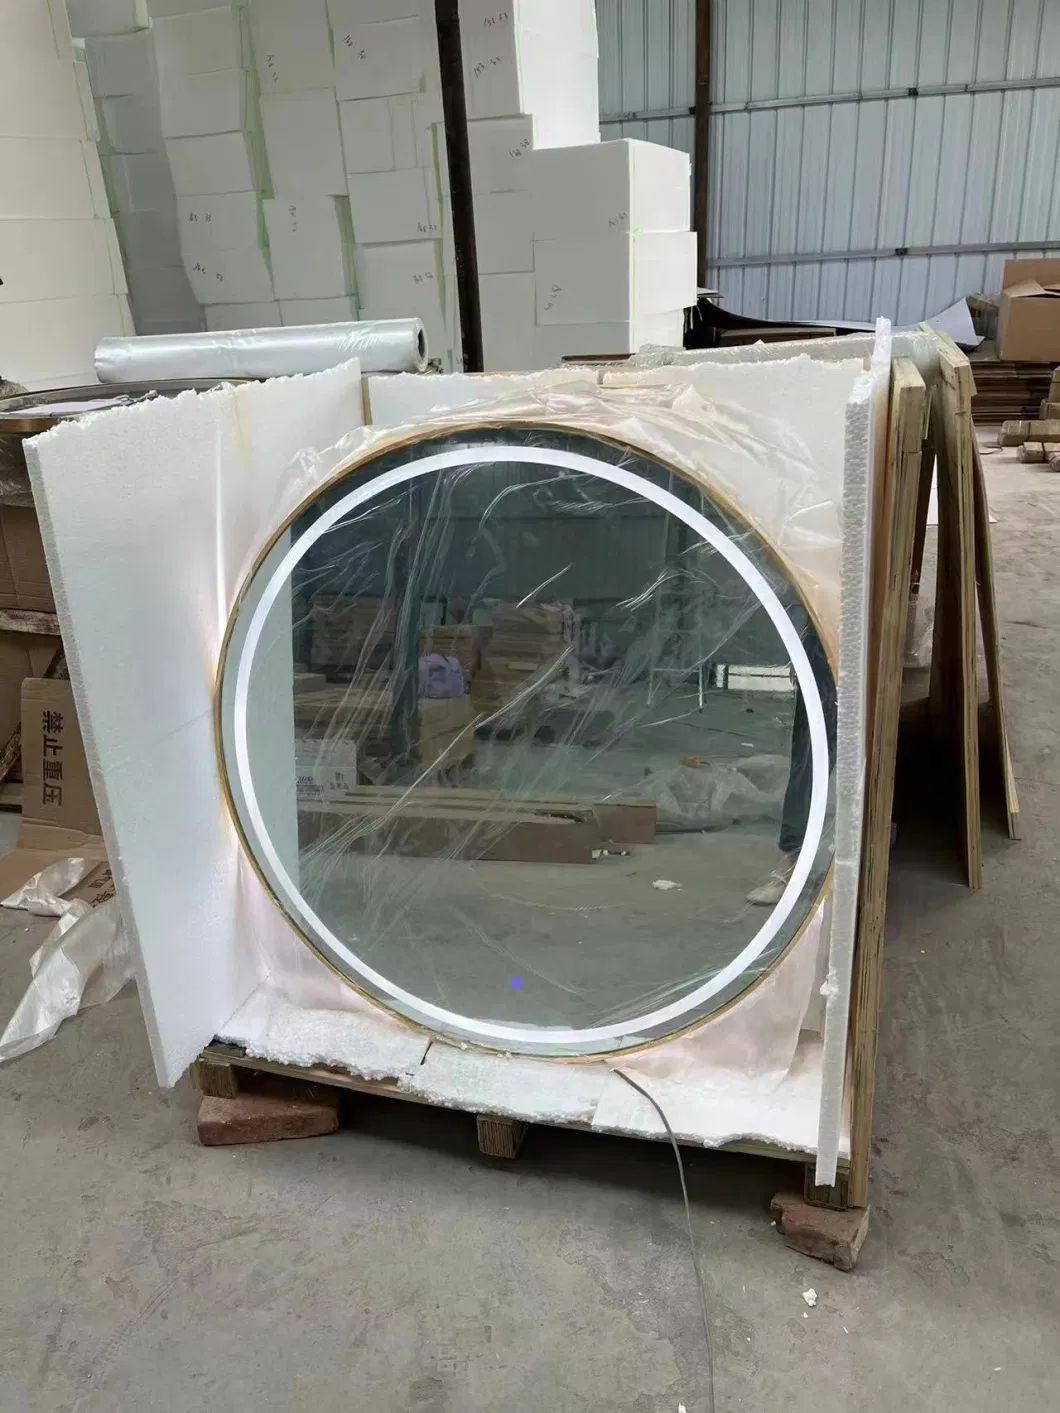 Smart Gold Aluminum Framed Mirror with LED Light Full Length Mirror Wall LED Mirror